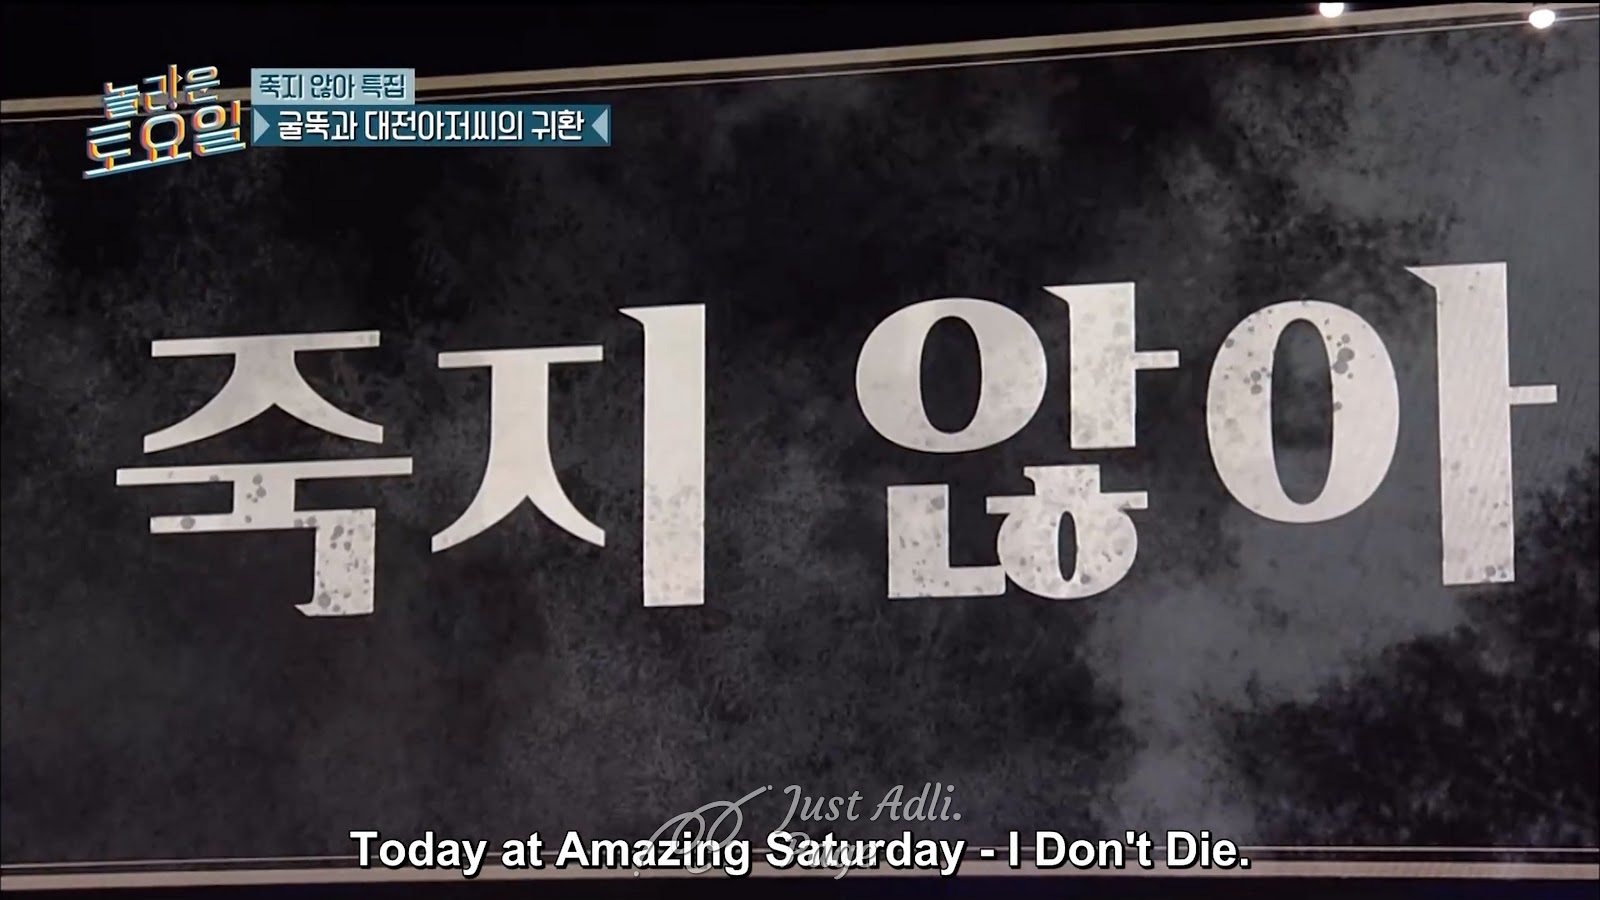 Amazing Saturday 191 theme, 죽지 않아 (Jukji Anh-a), or I Don't Die.